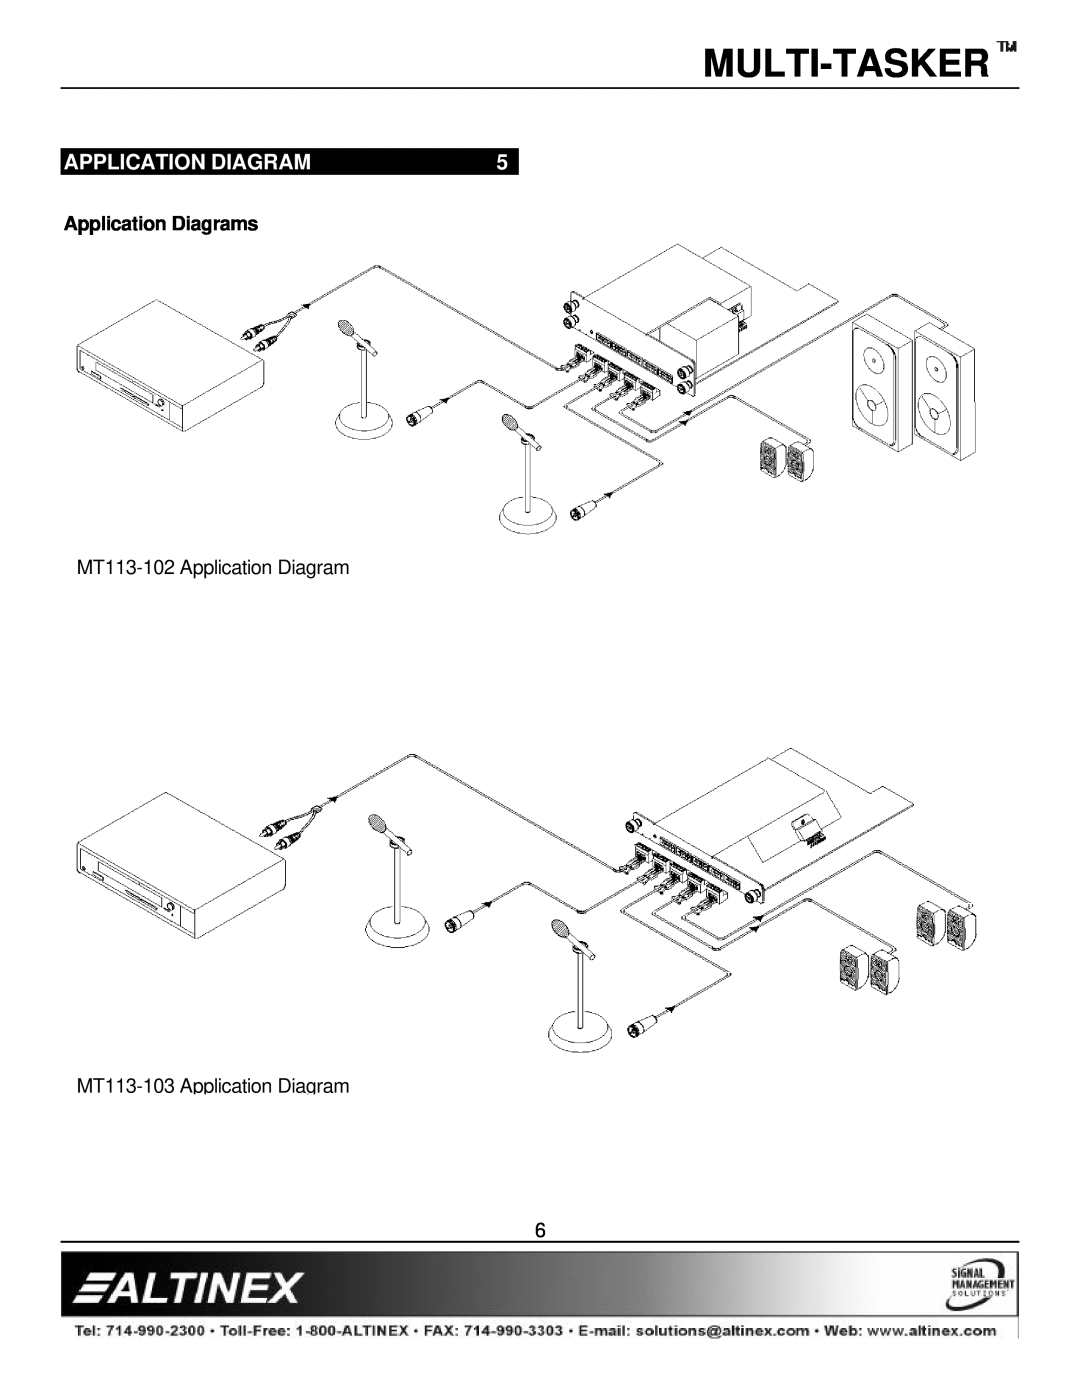 Altinex MT113-102/103 manual Multi-Tasker, Application Diagrams 